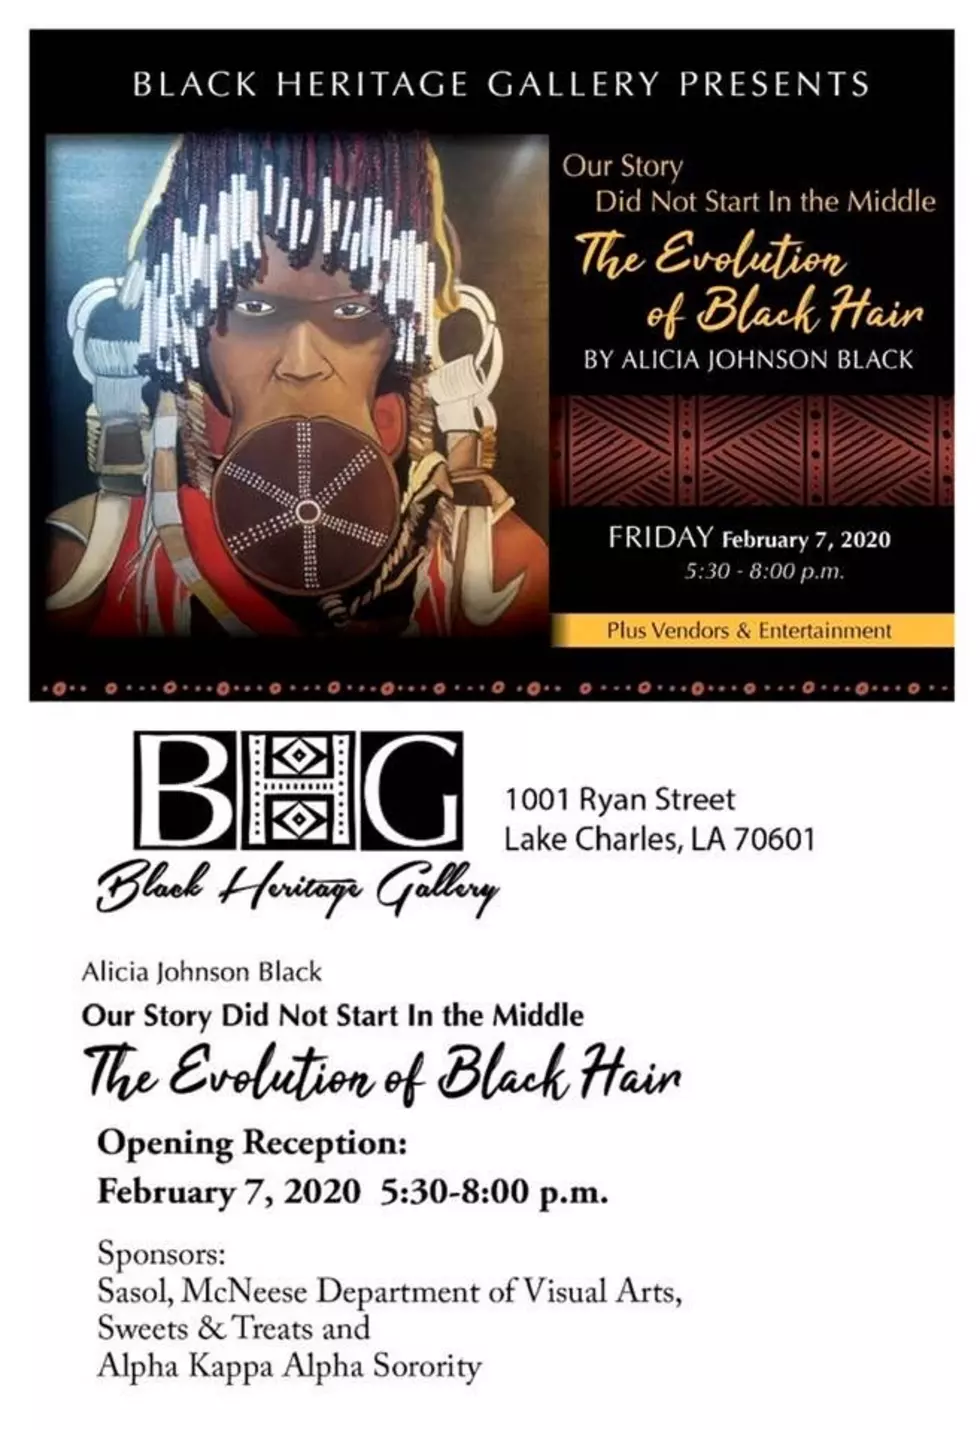 Black Heritage Gallery Presents The Evolution of Black Hair